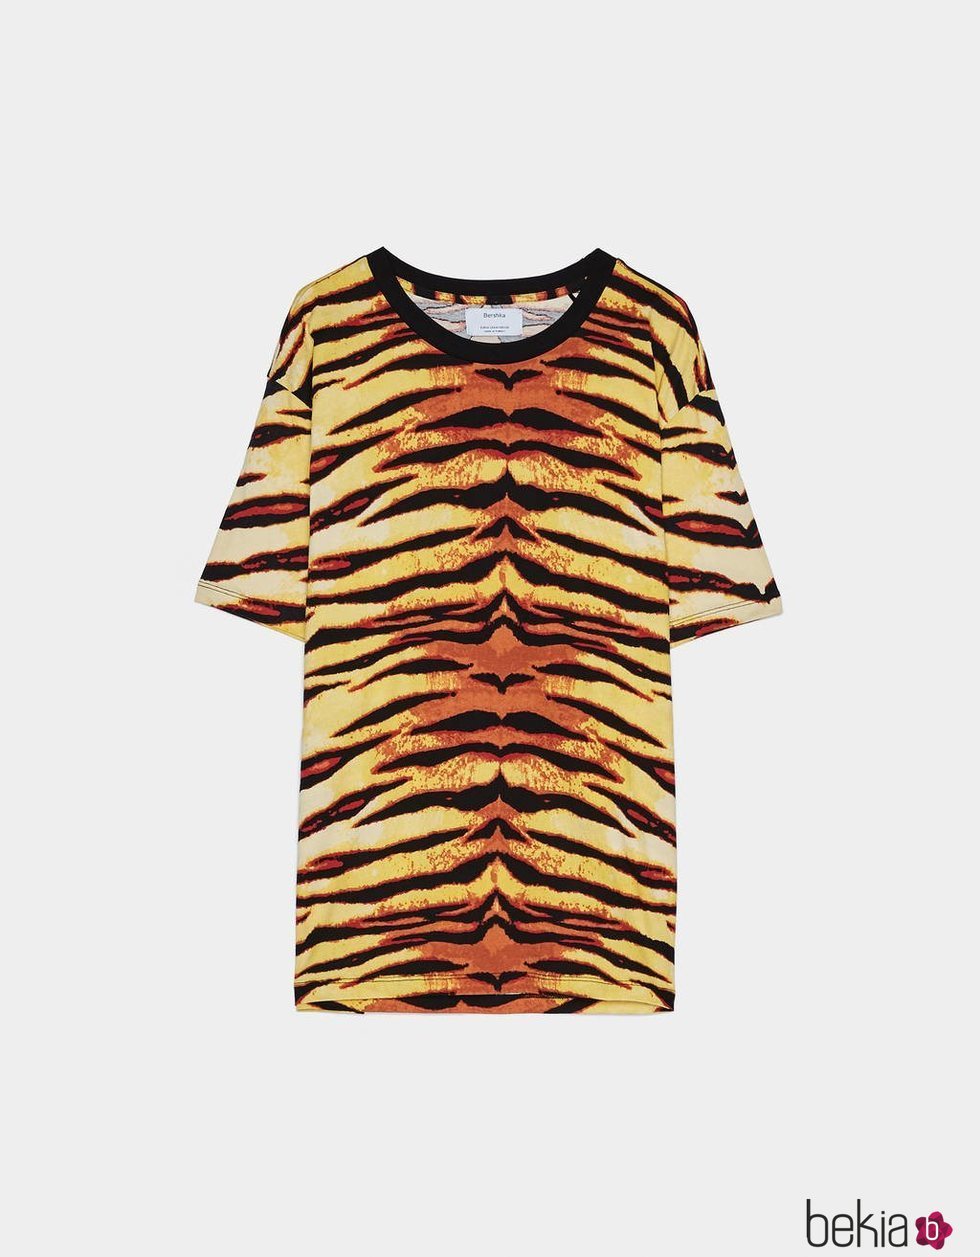 Camiseta estampado animal tigre Bershka